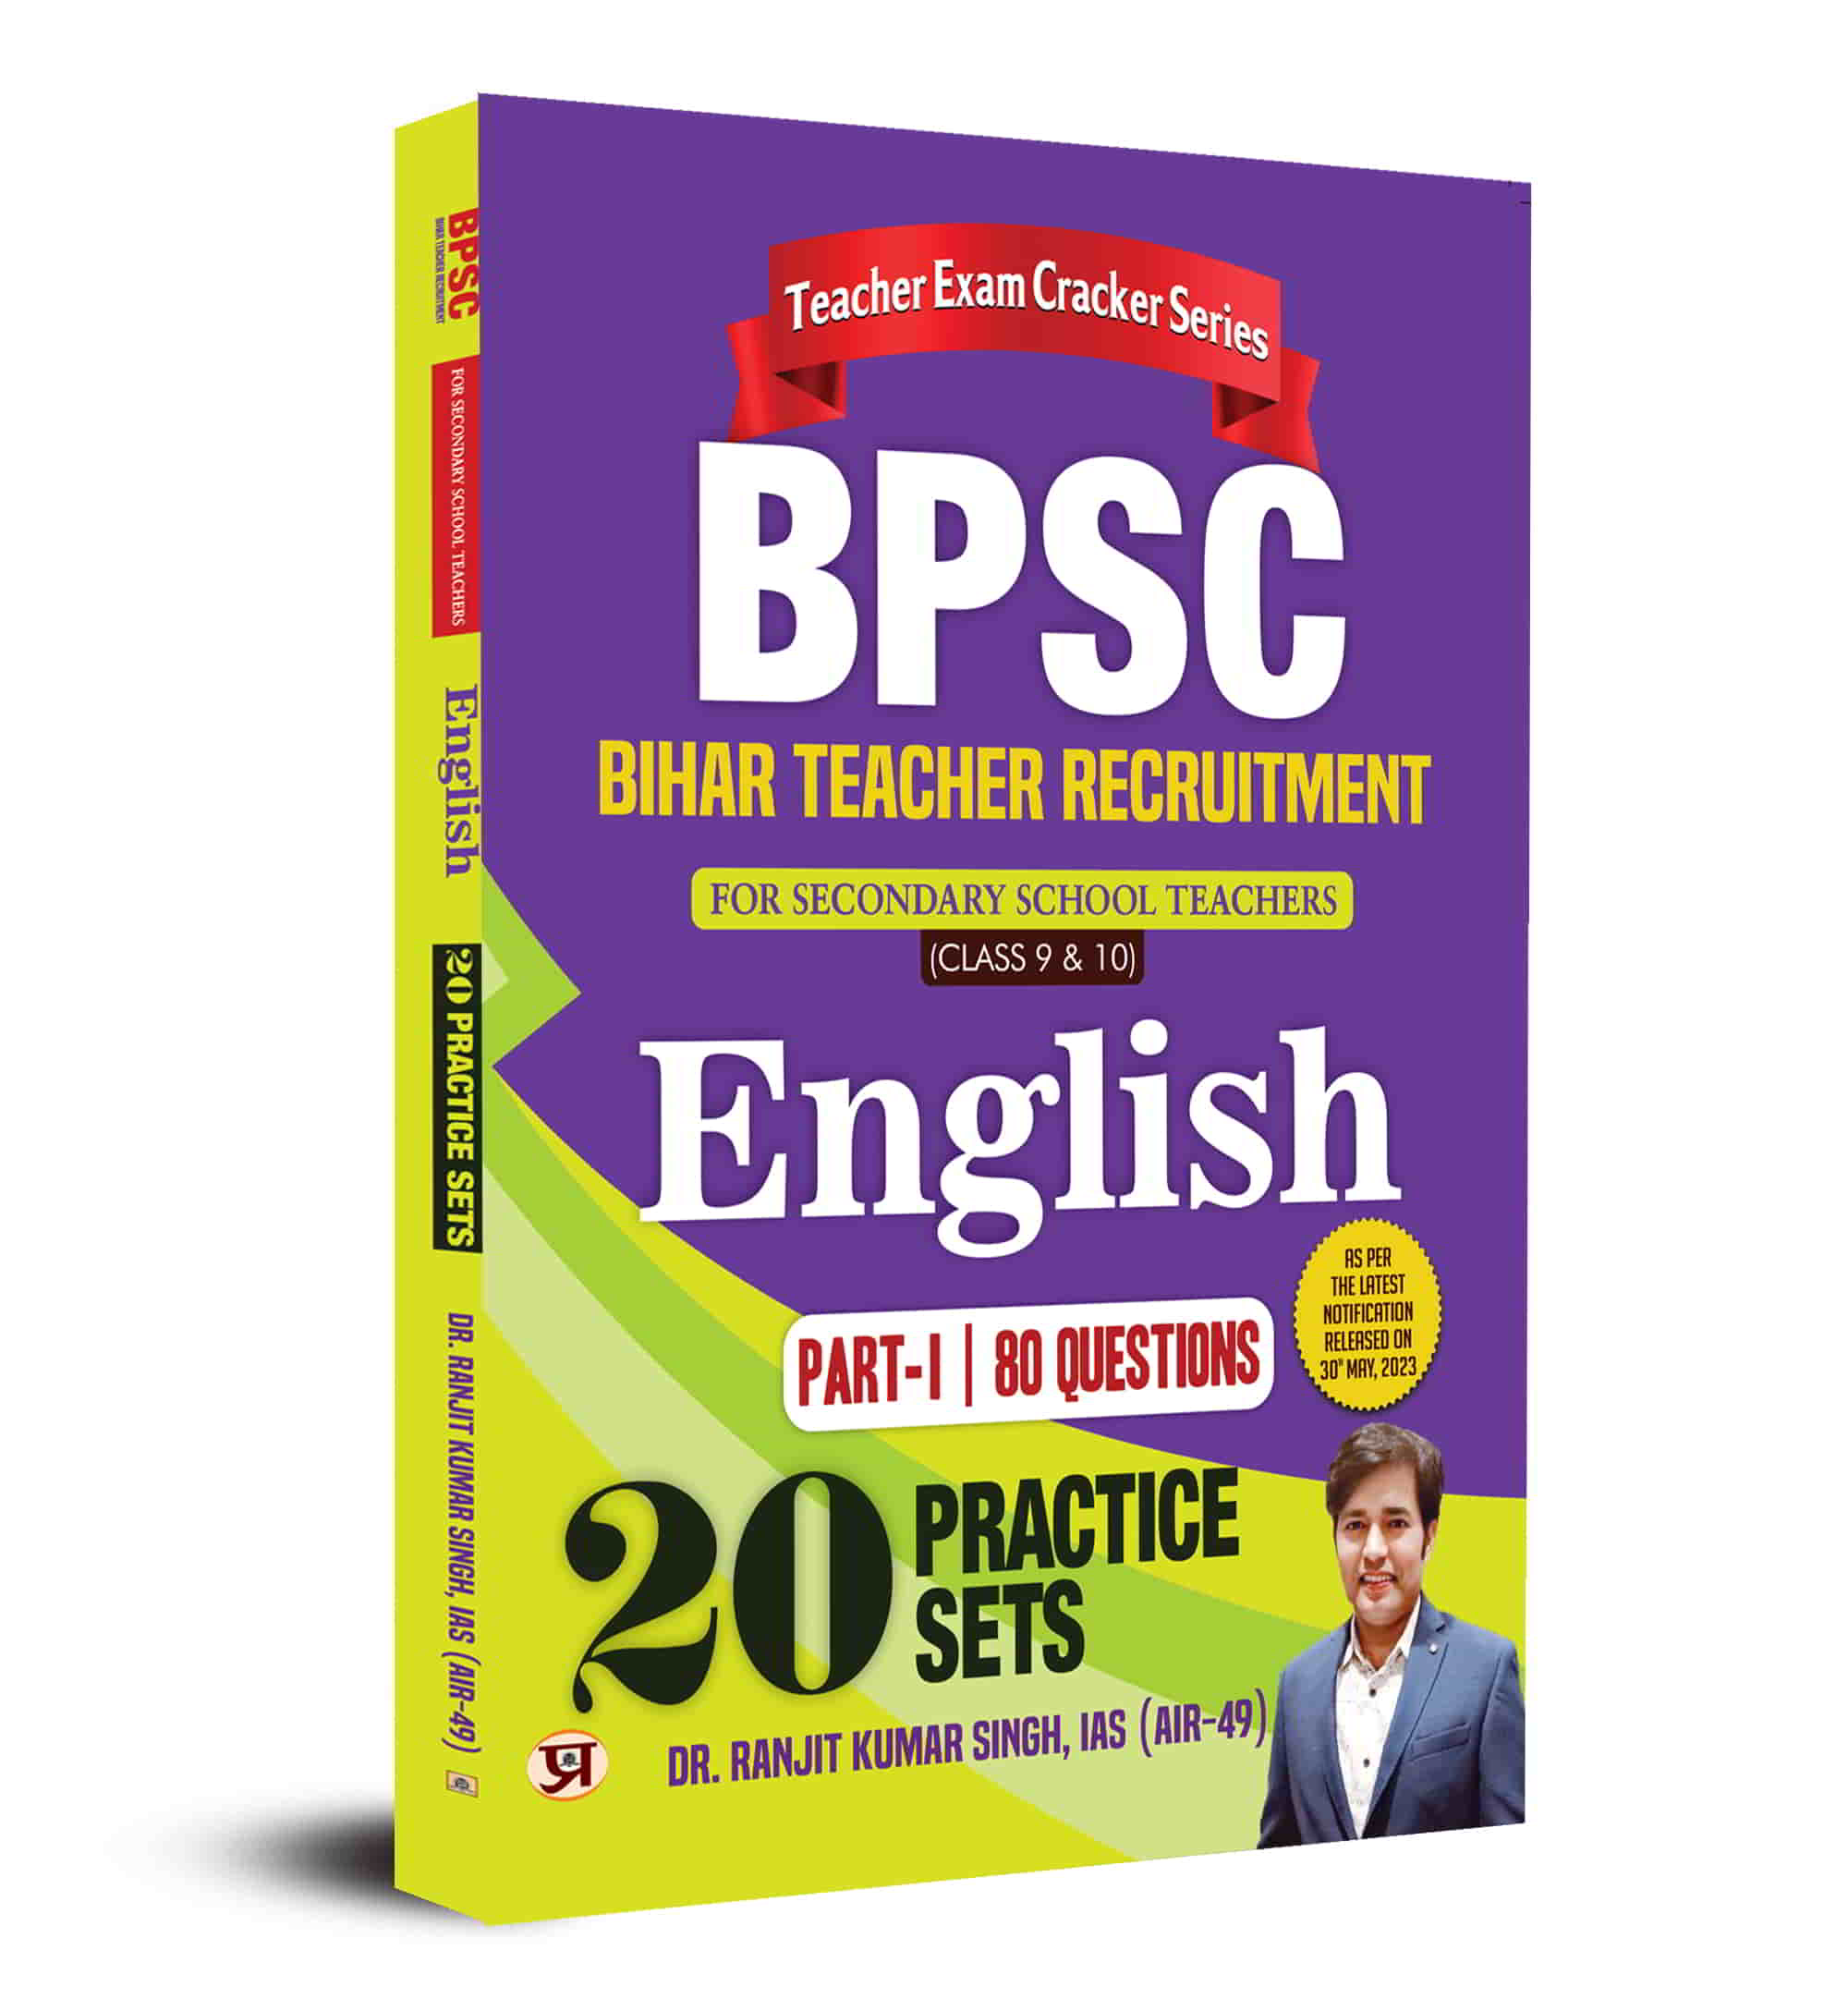 English Subject 20 Practice Sets For BPSC Bihar Teacher Recruitment Book